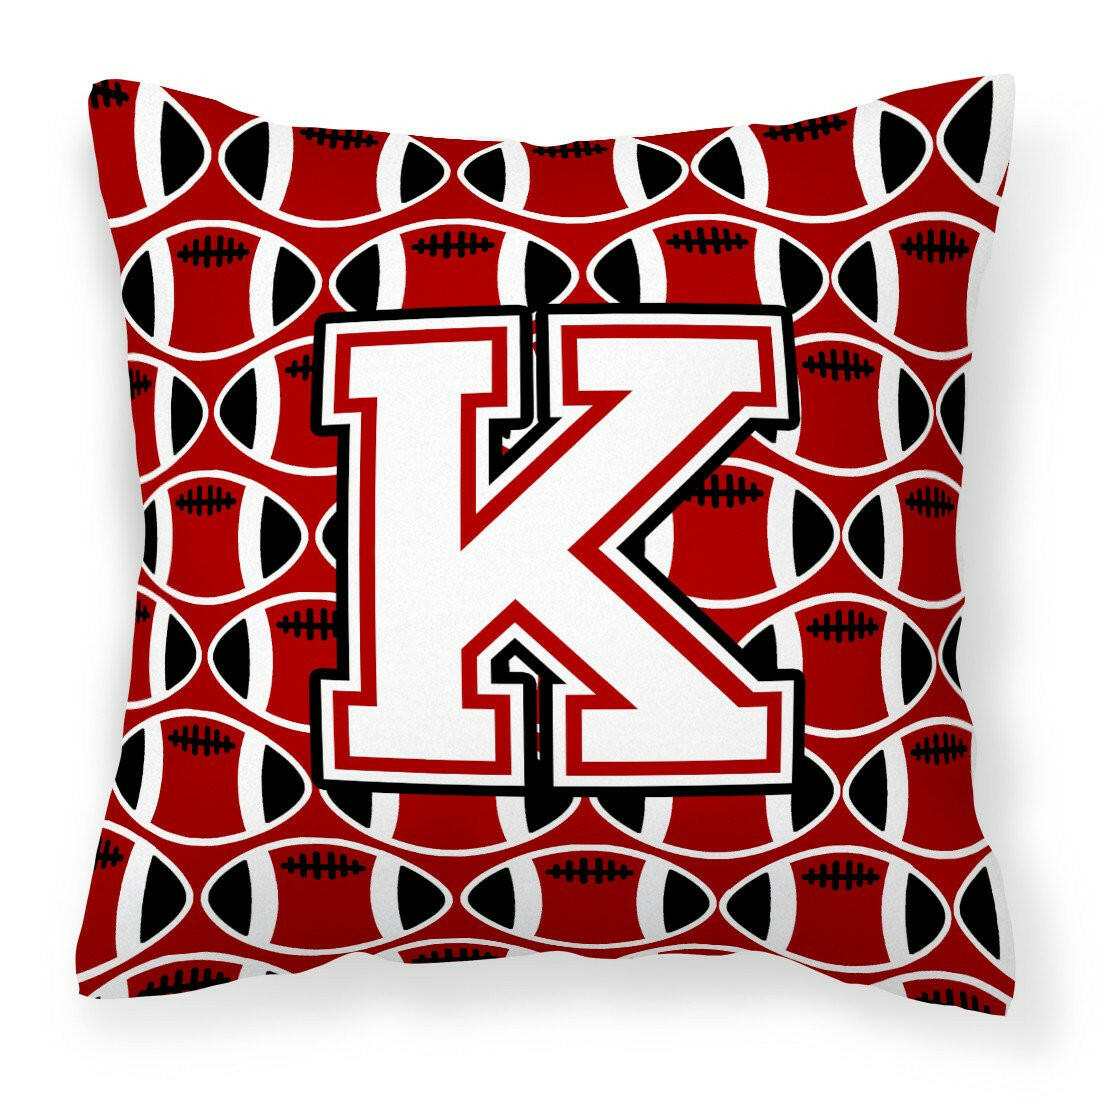 Letter K Football Cardinal and White Fabric Decorative Pillow CJ1082-KPW1414 by Caroline's Treasures